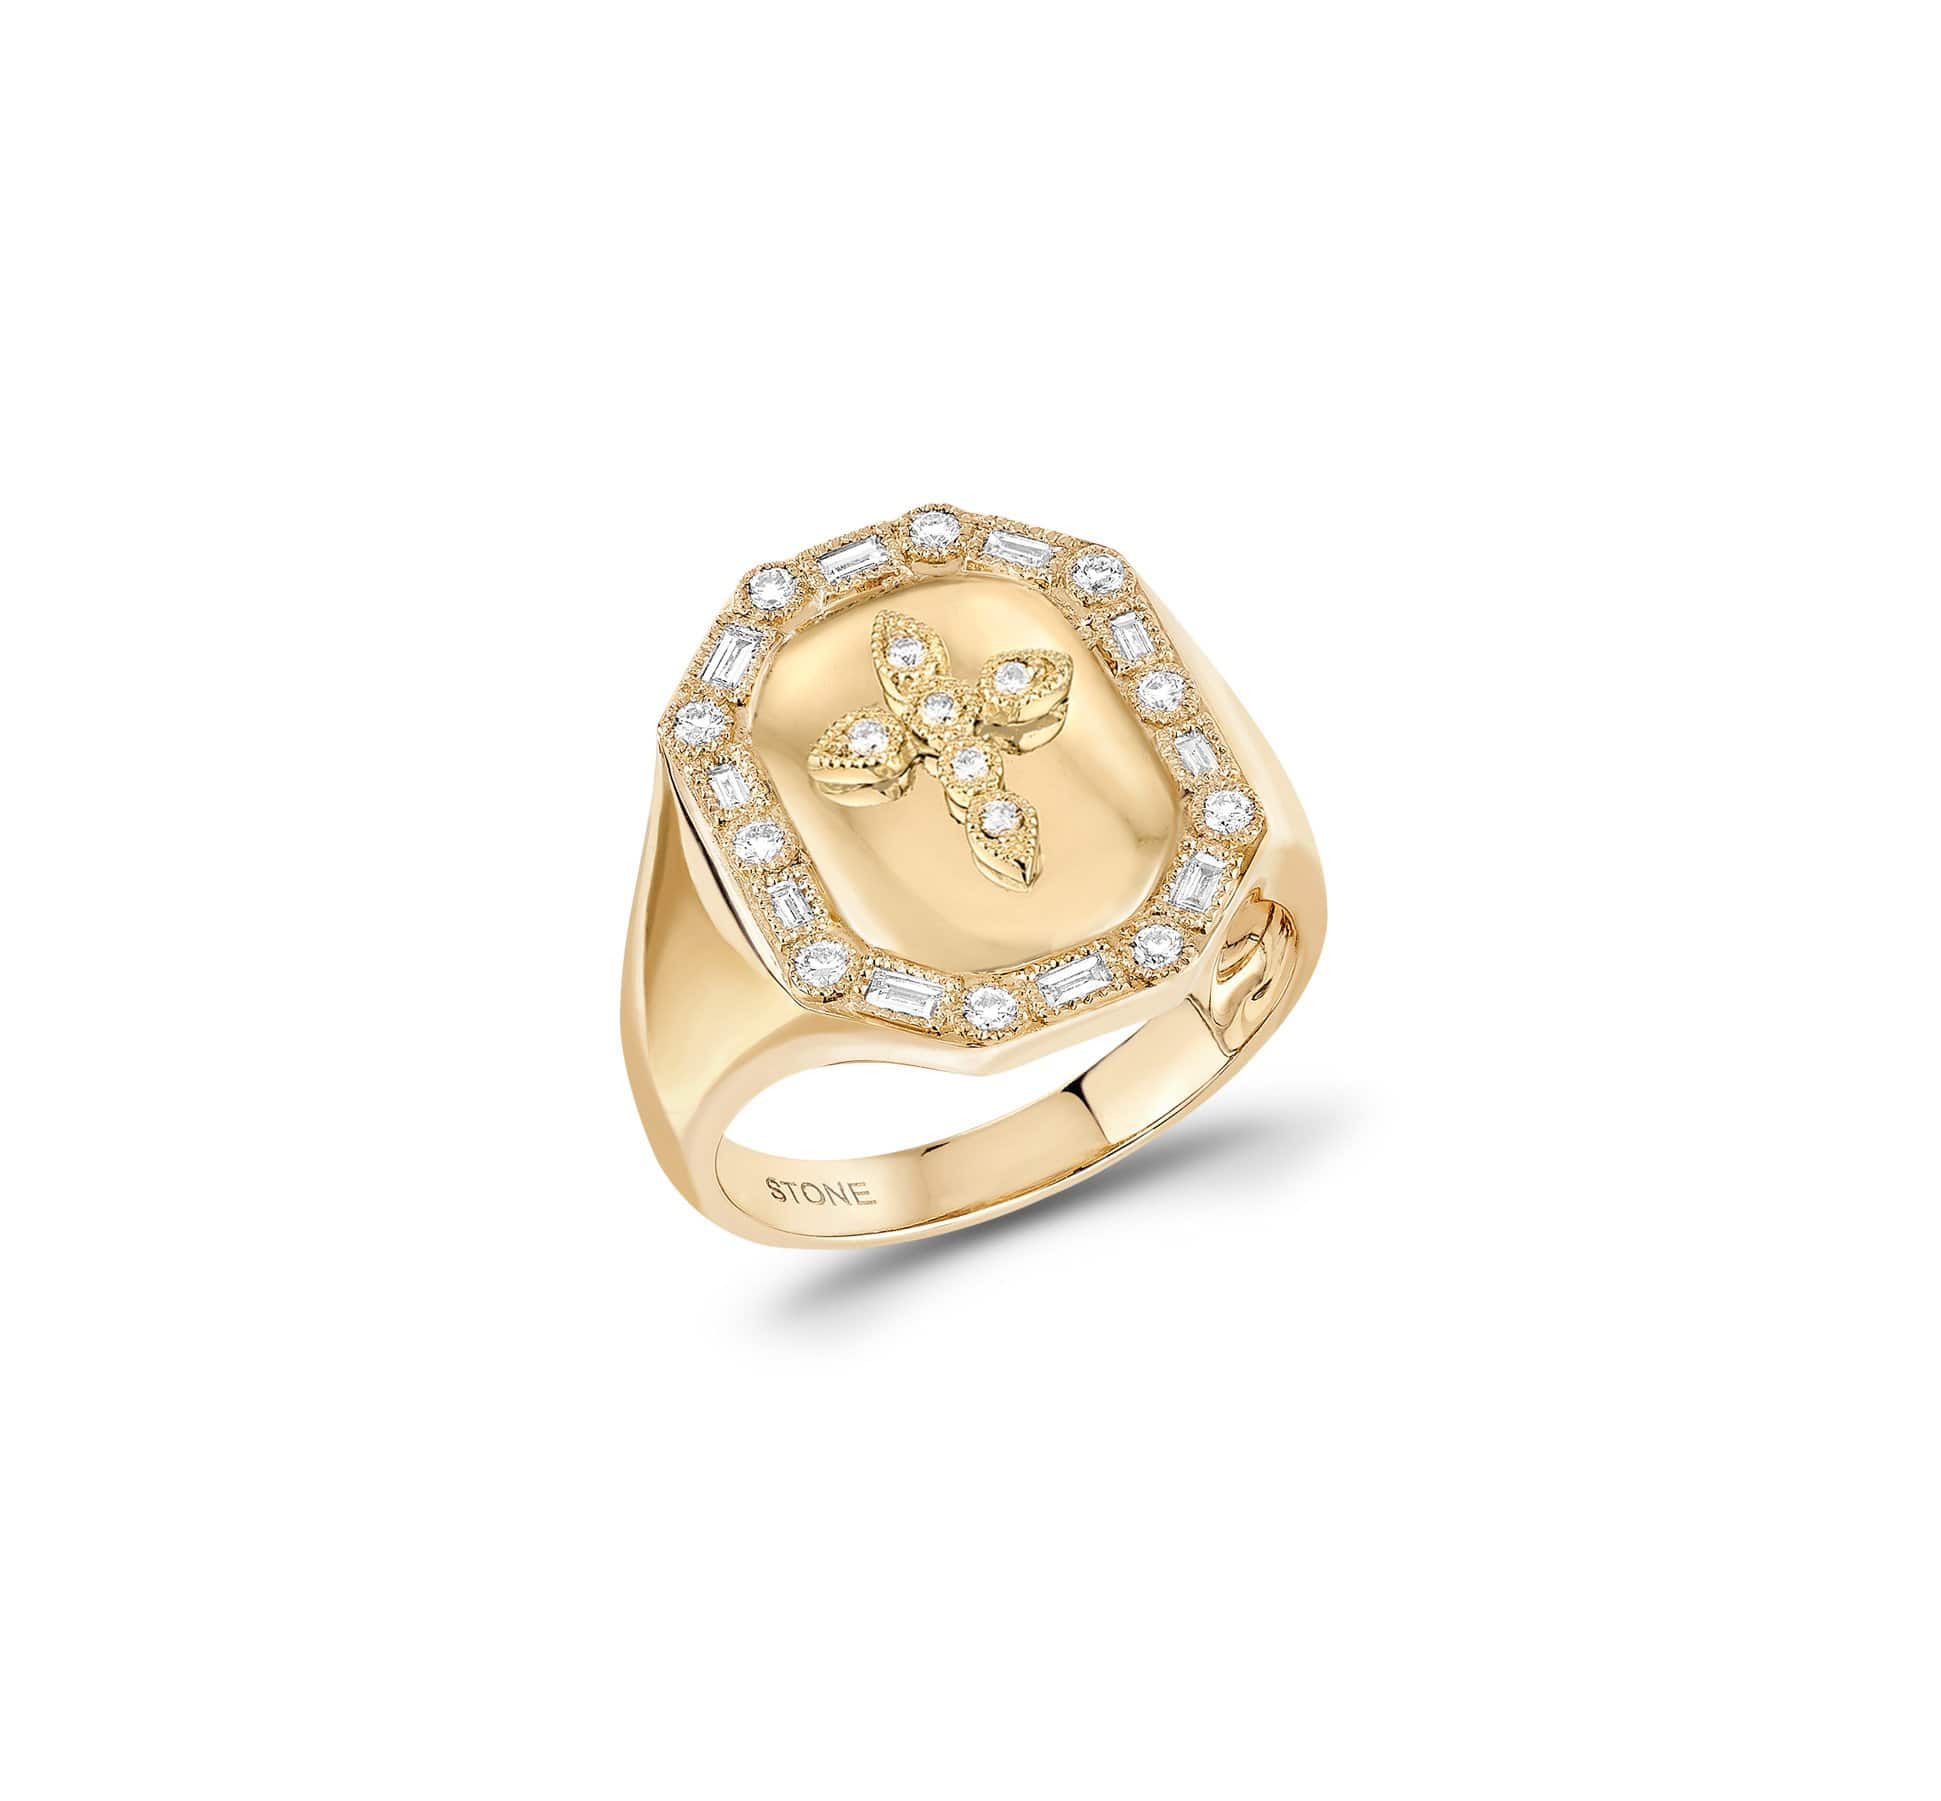 Céleste Gold and diamonds signet ring